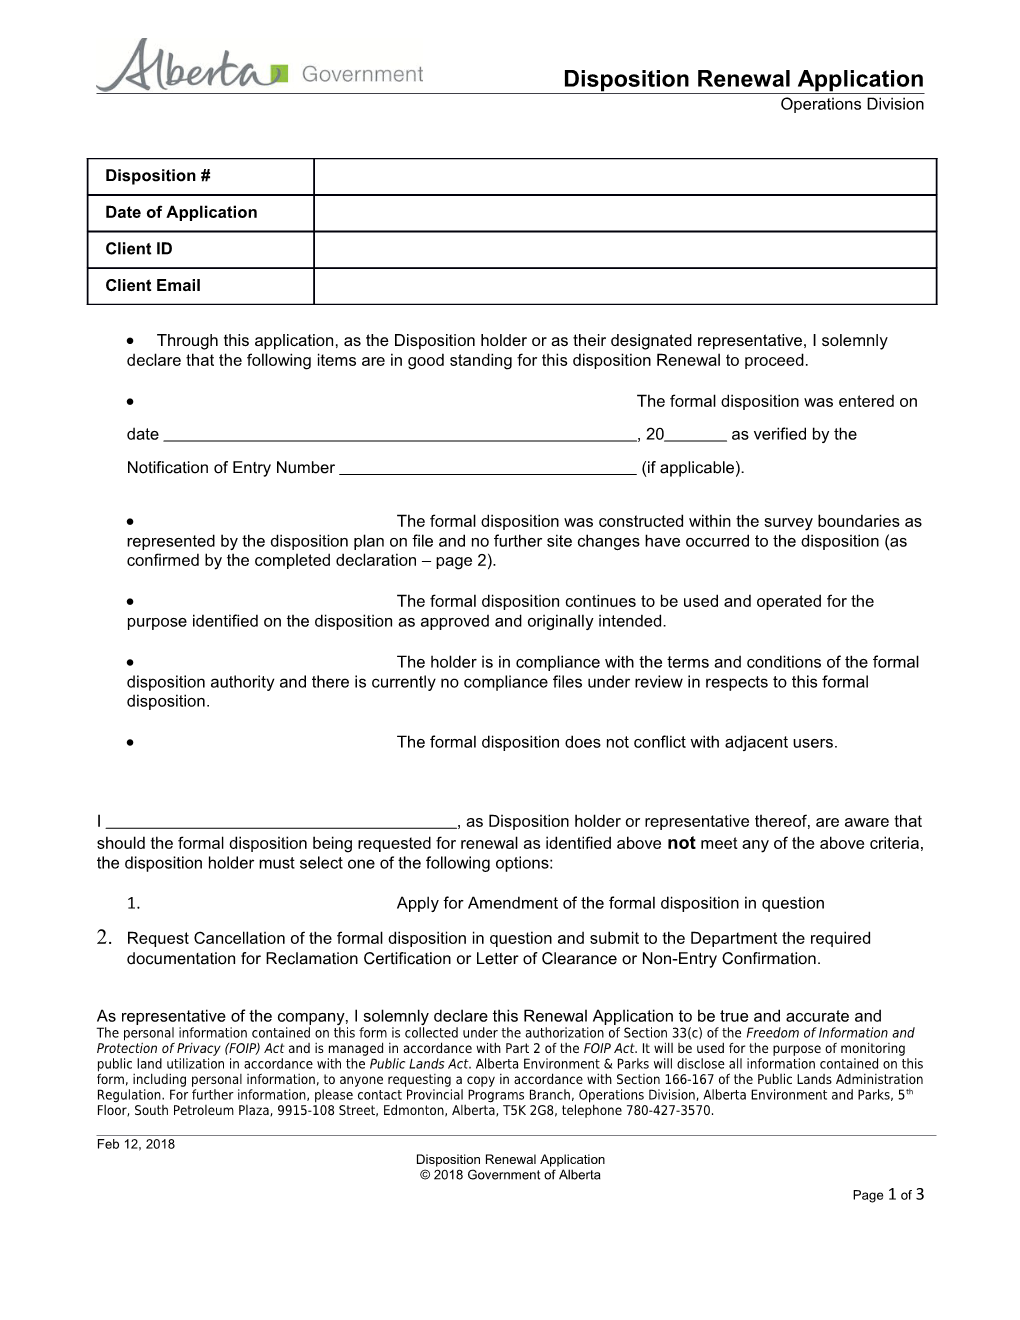 Disposition Renewal Application Form